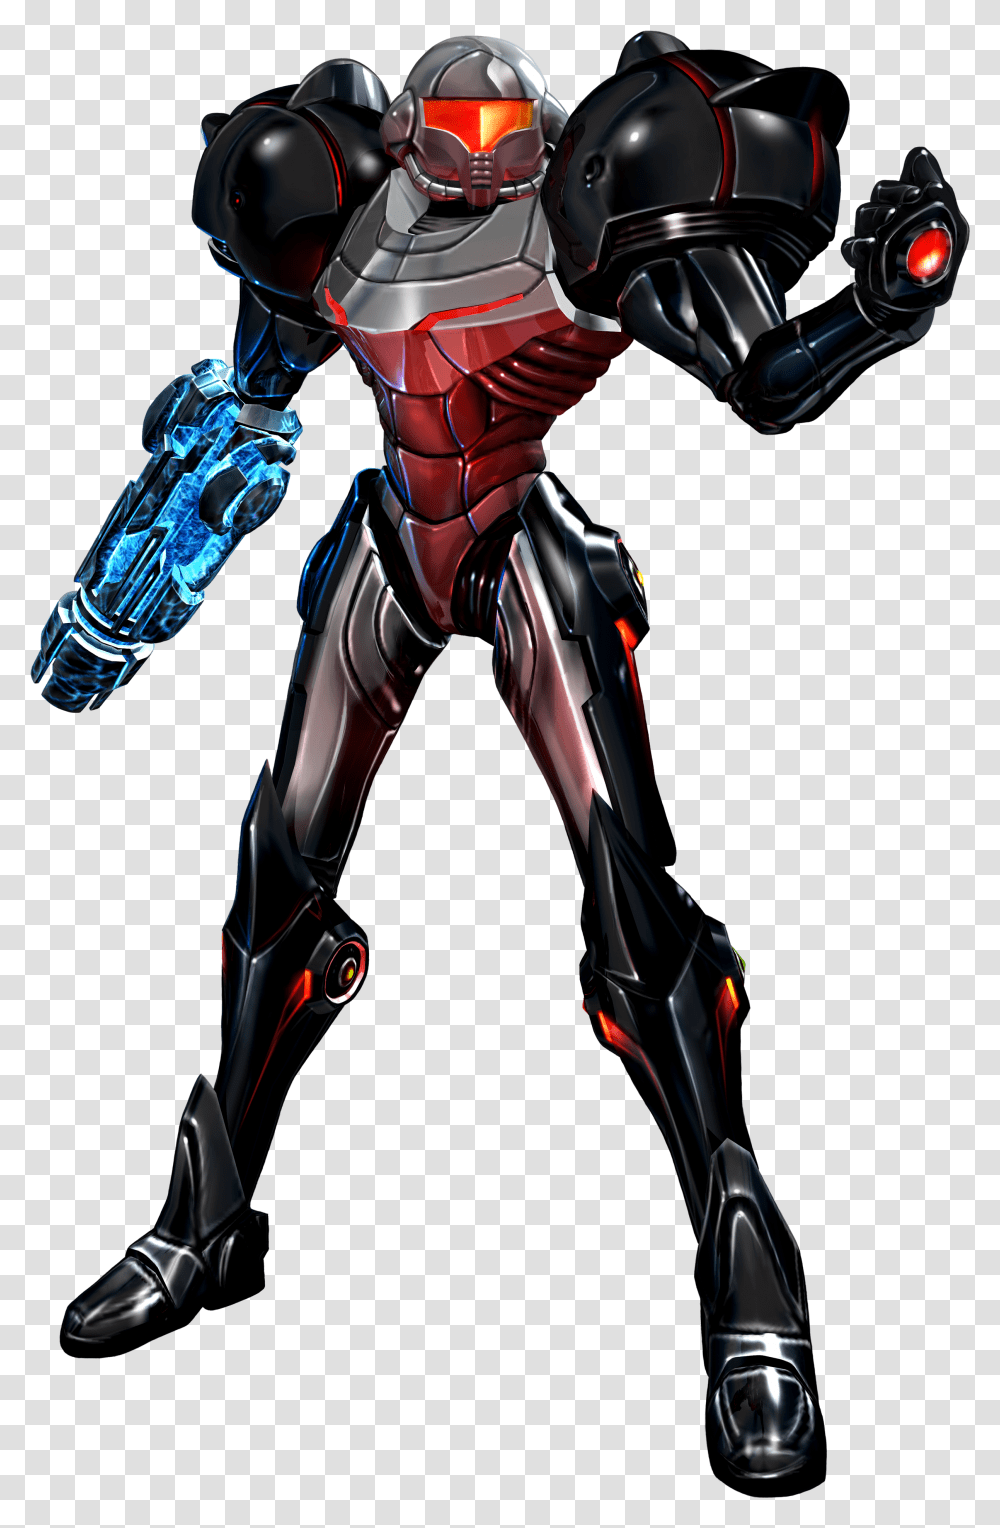 What Is Samus Metroid Prime Phazon Suit Transparent Png